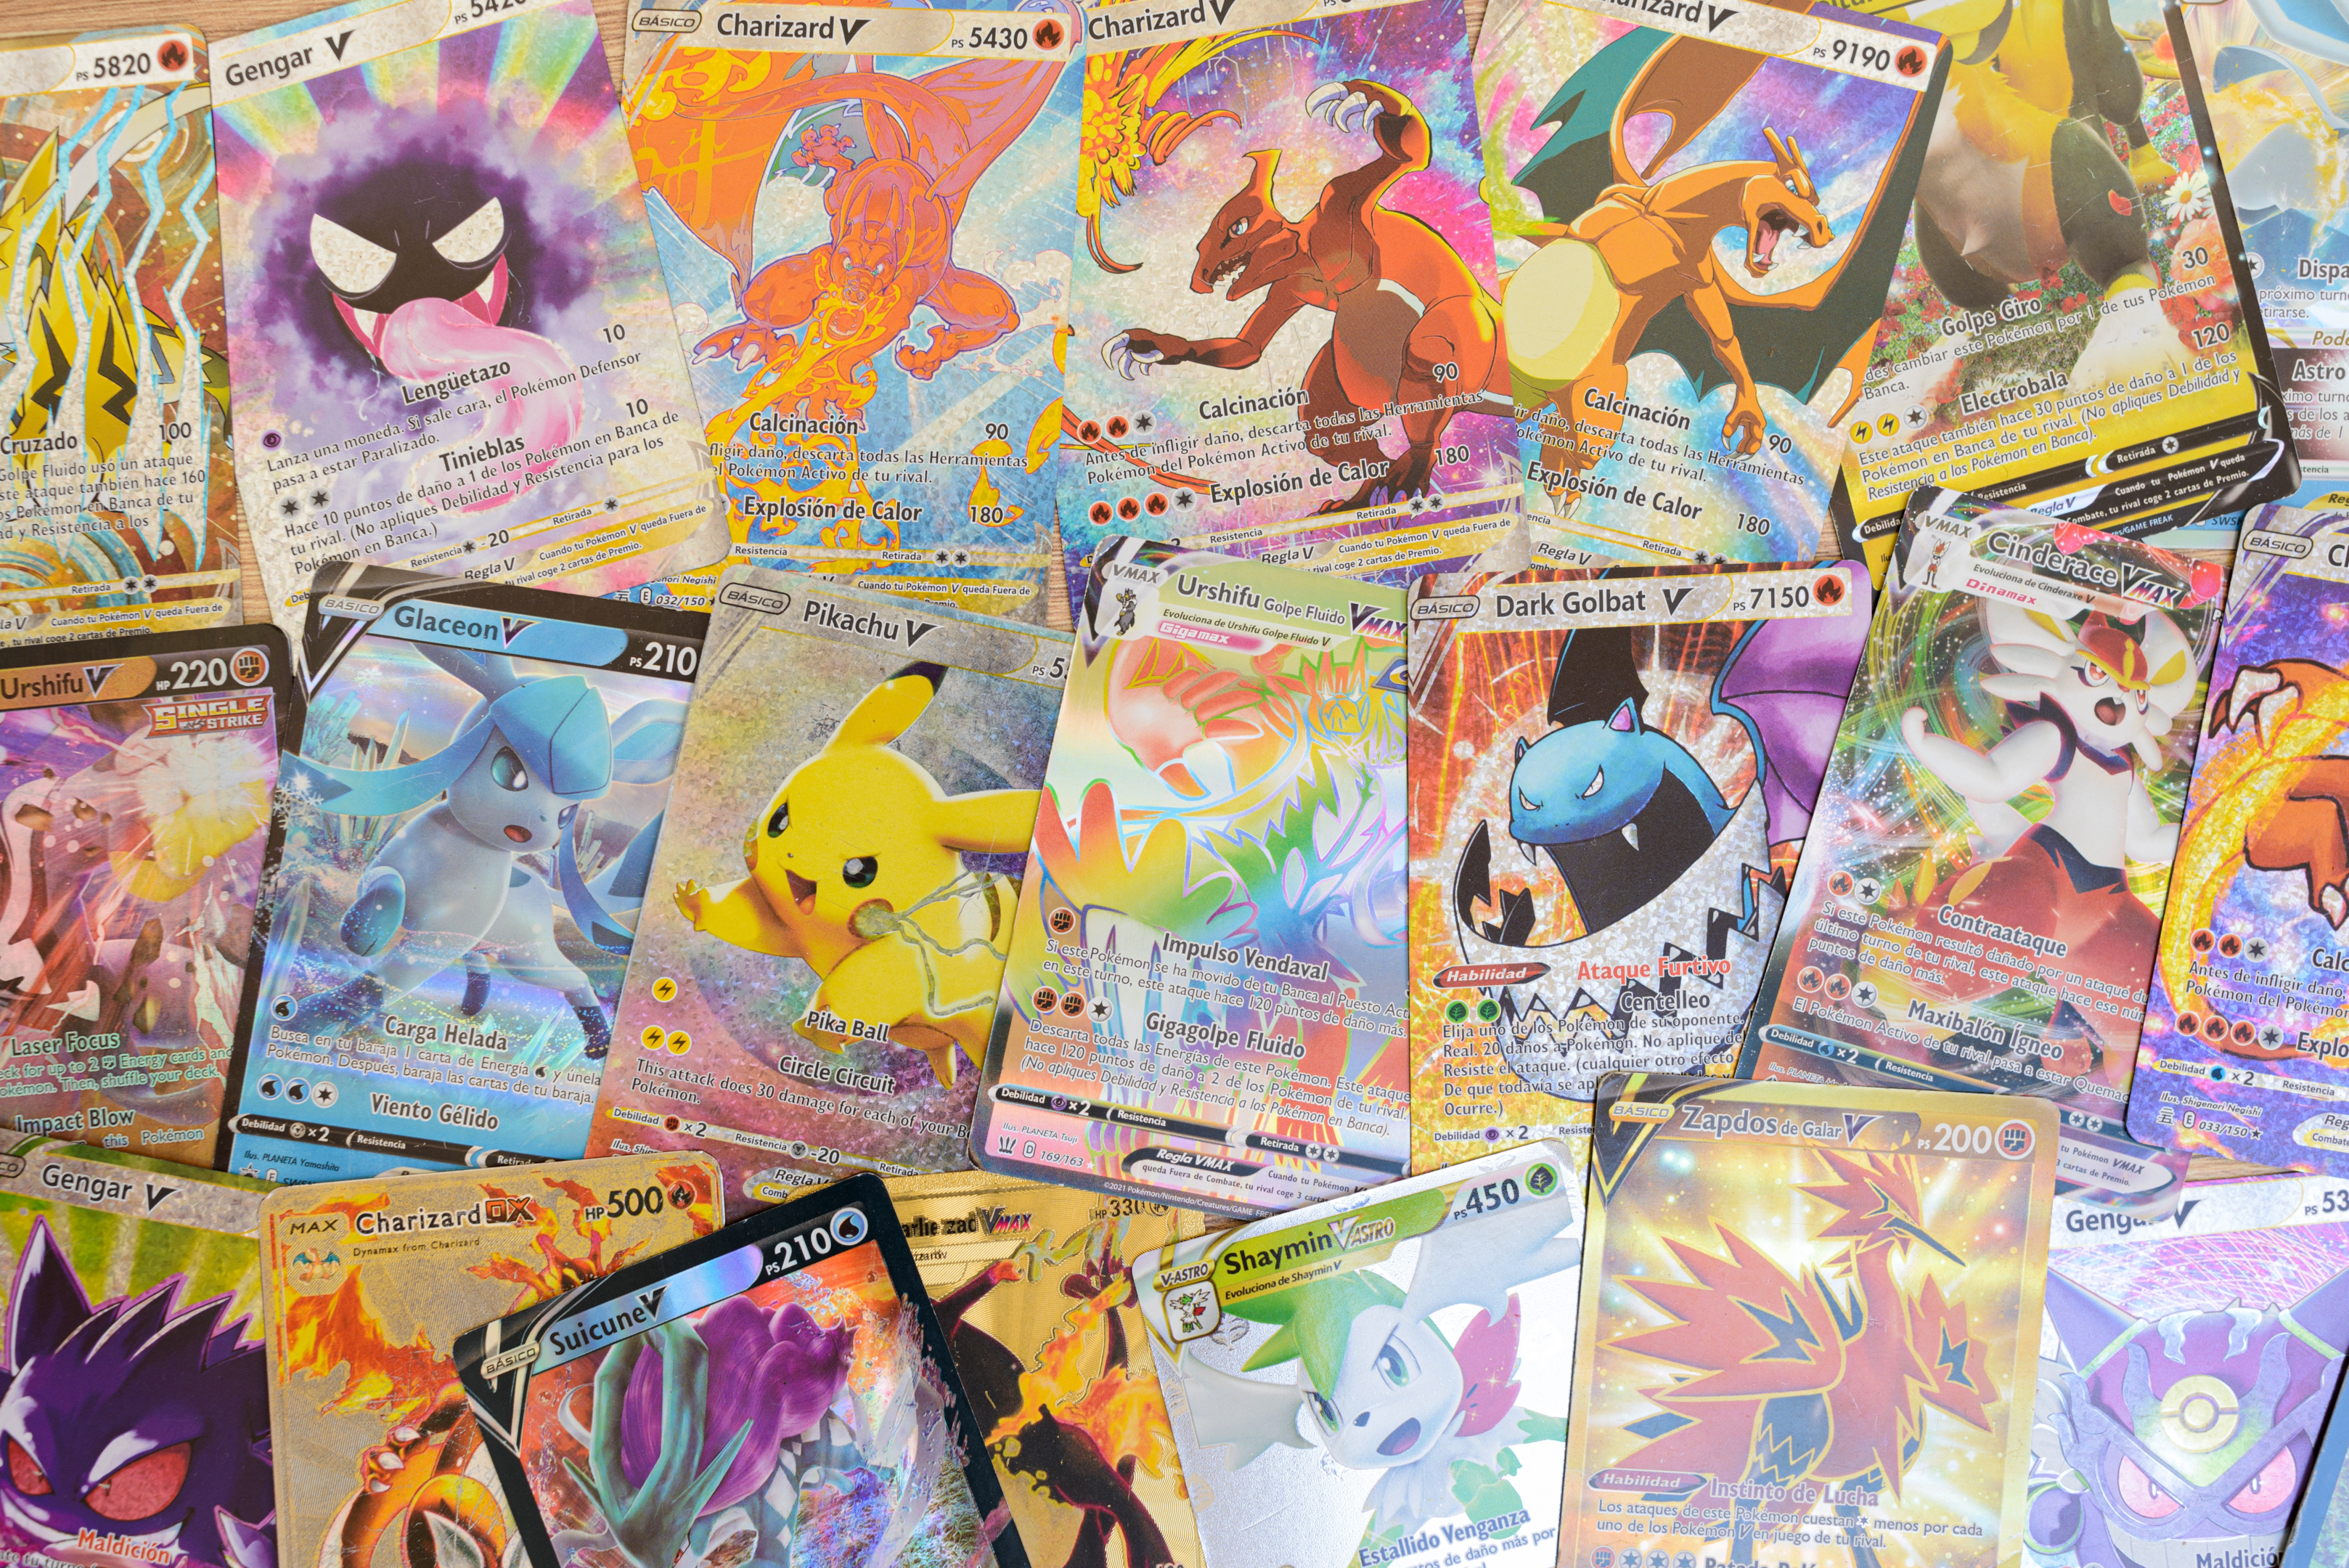 Plenty of Pokemon cards scattered